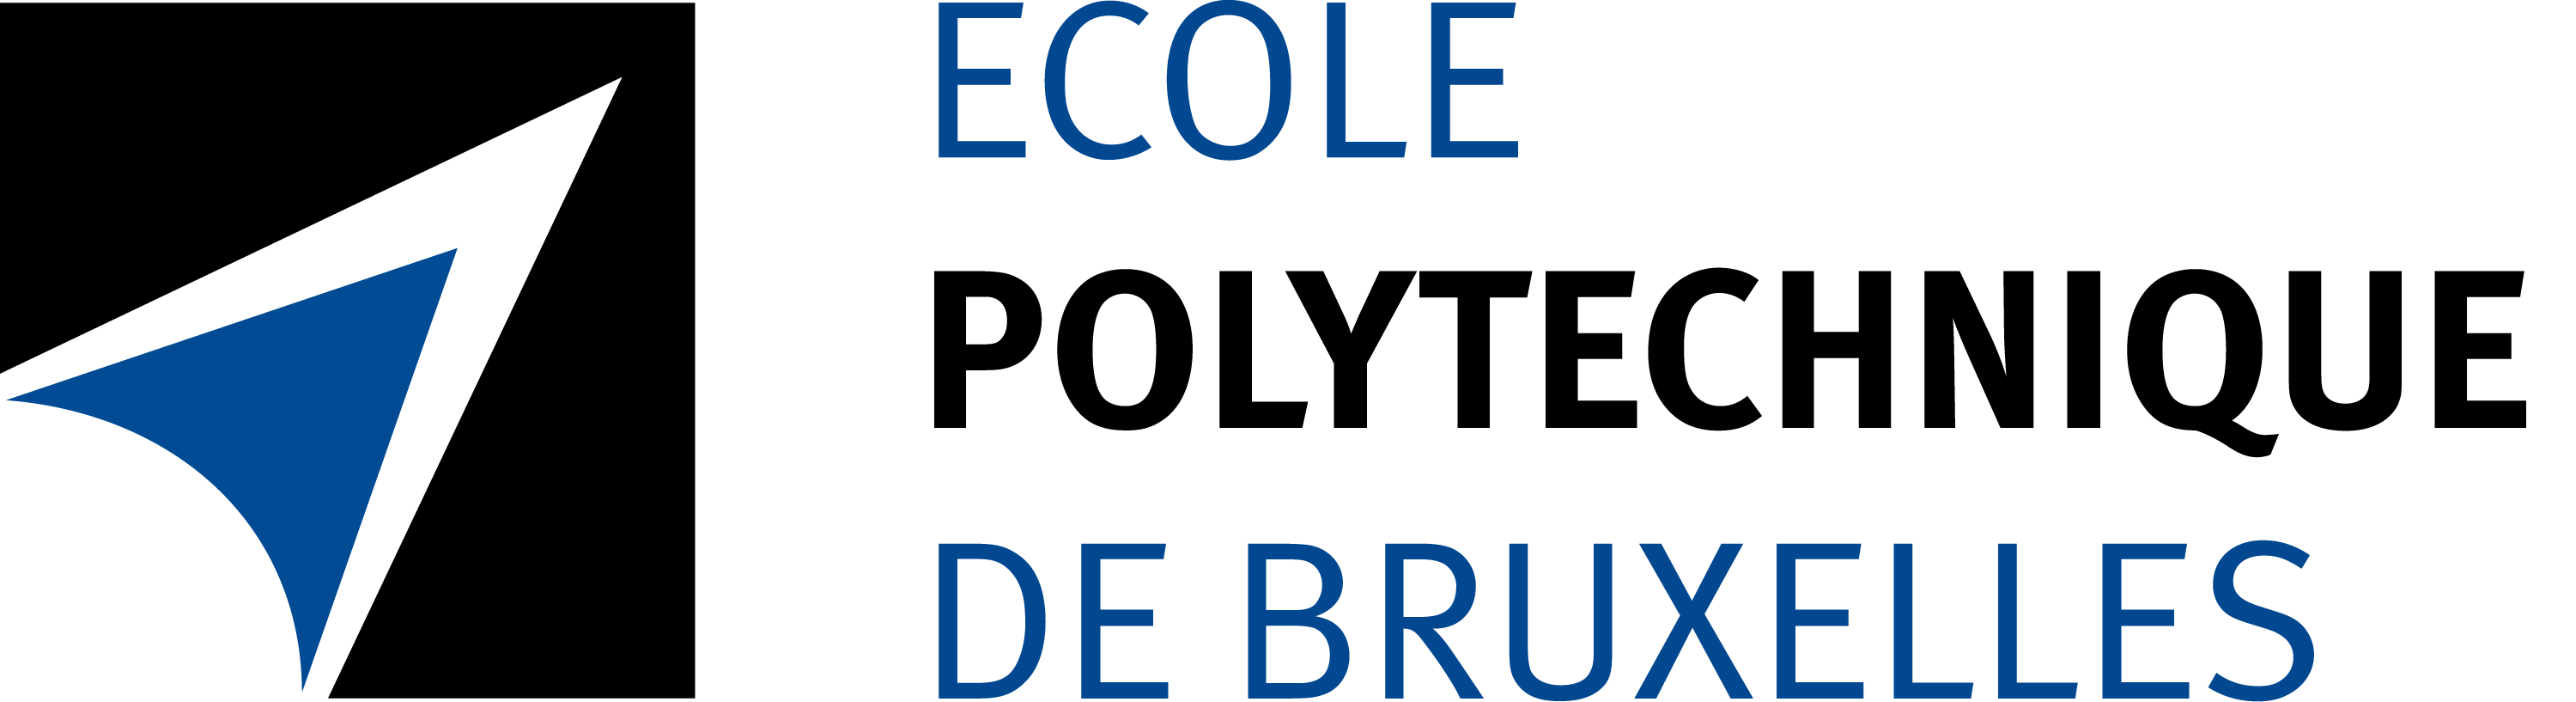 Logo EPB fond blanc